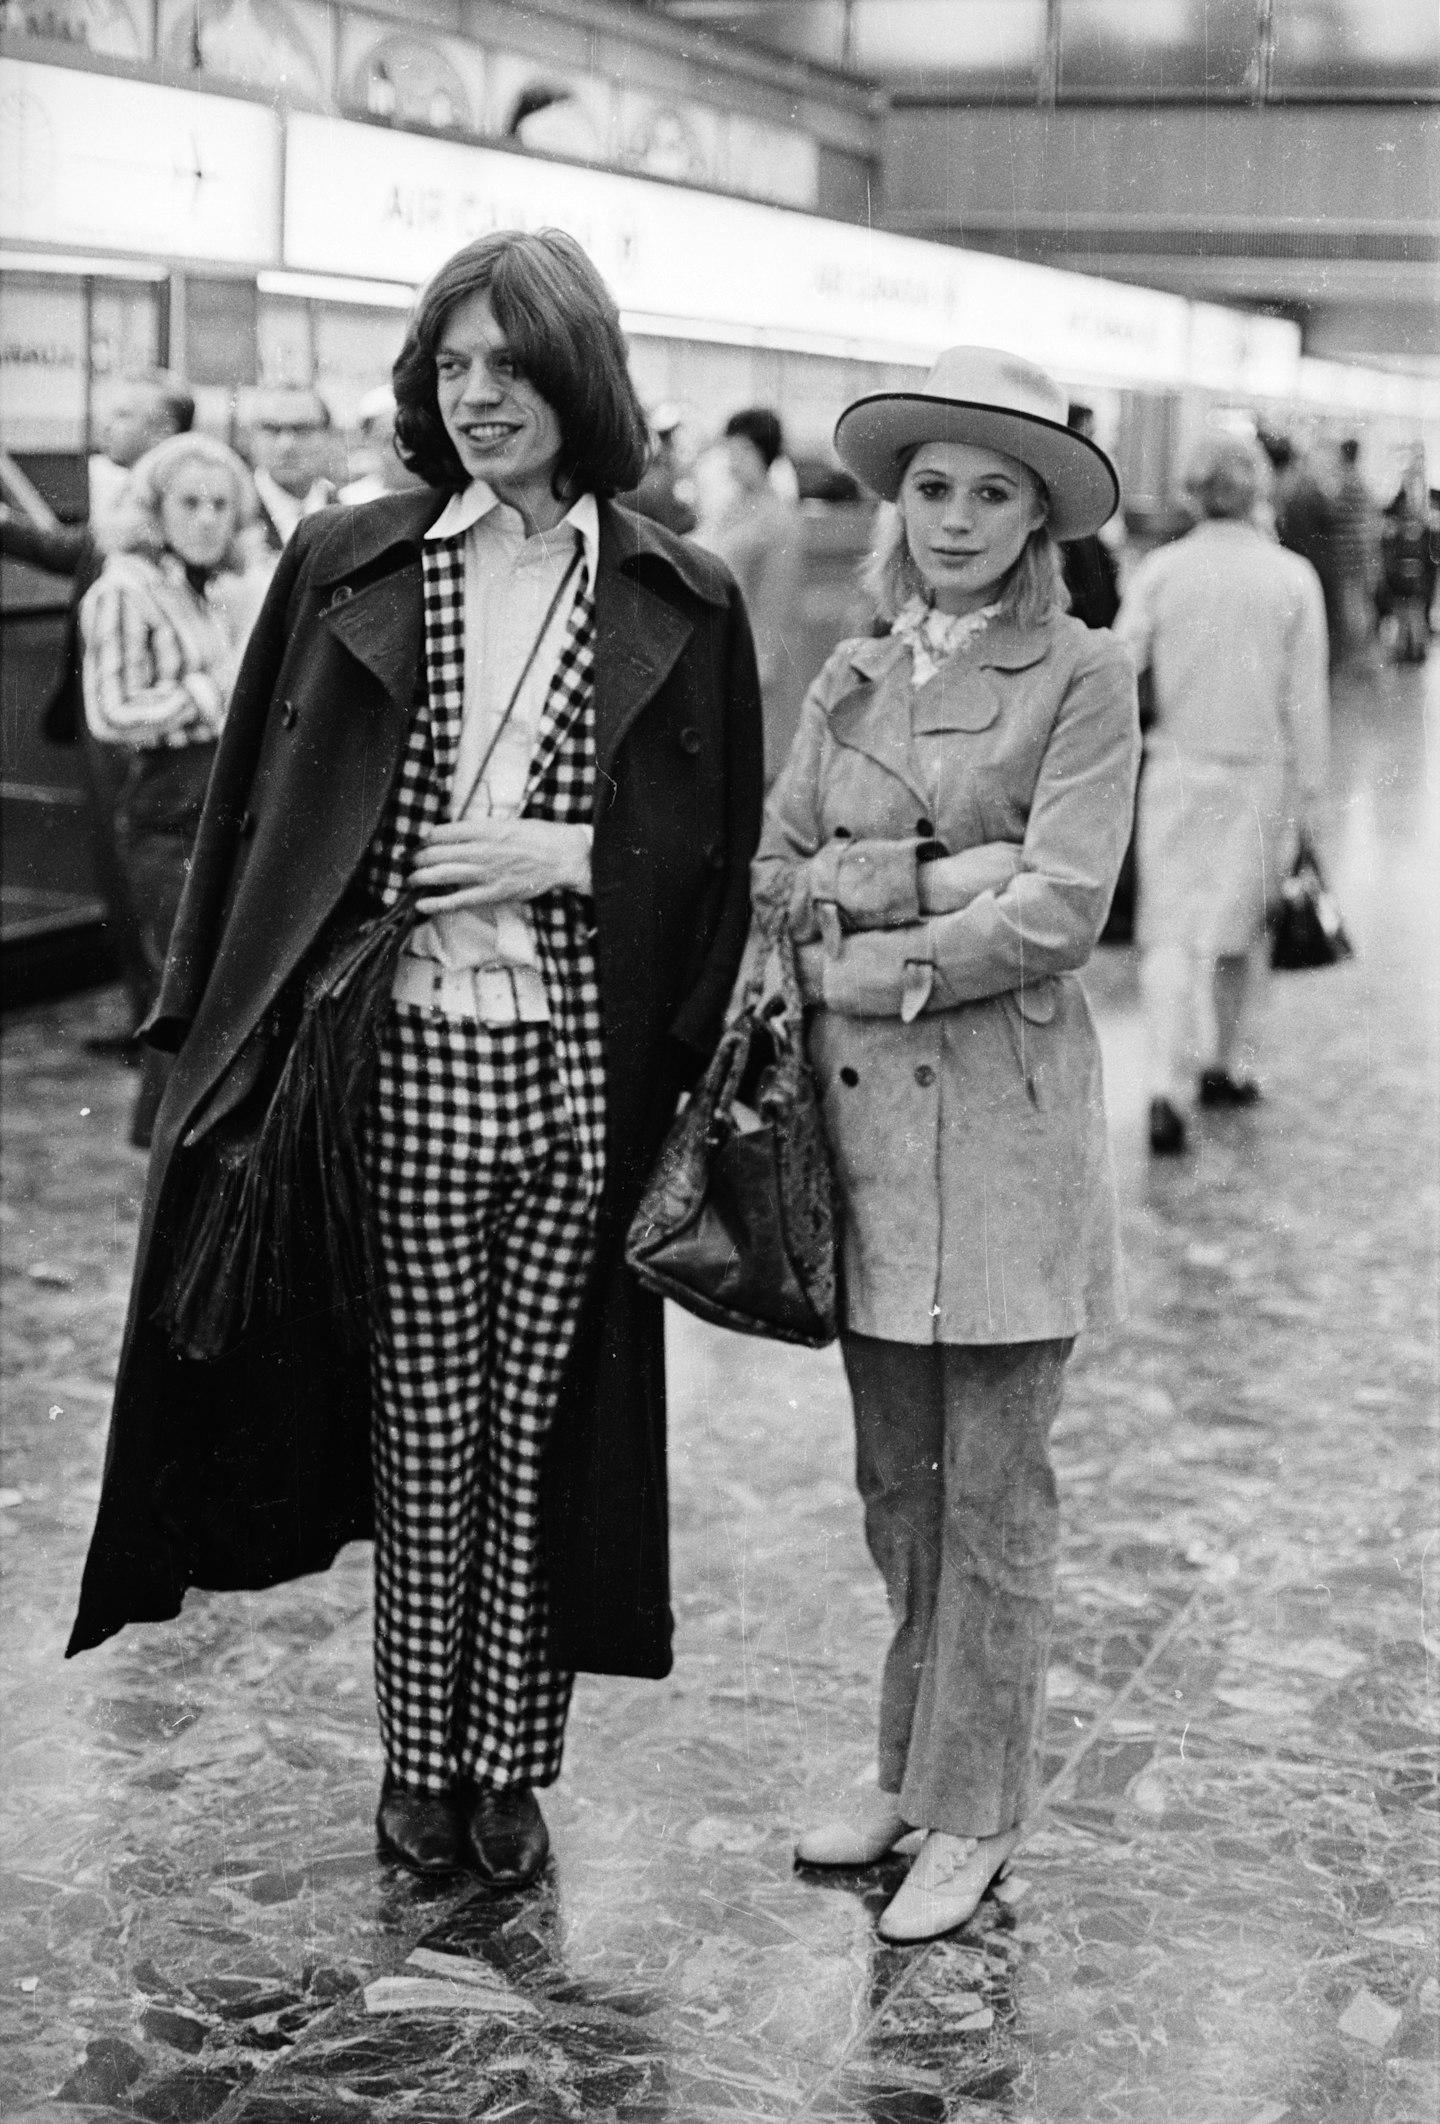 1966 – Mick Jagger and Marianne Faithfull